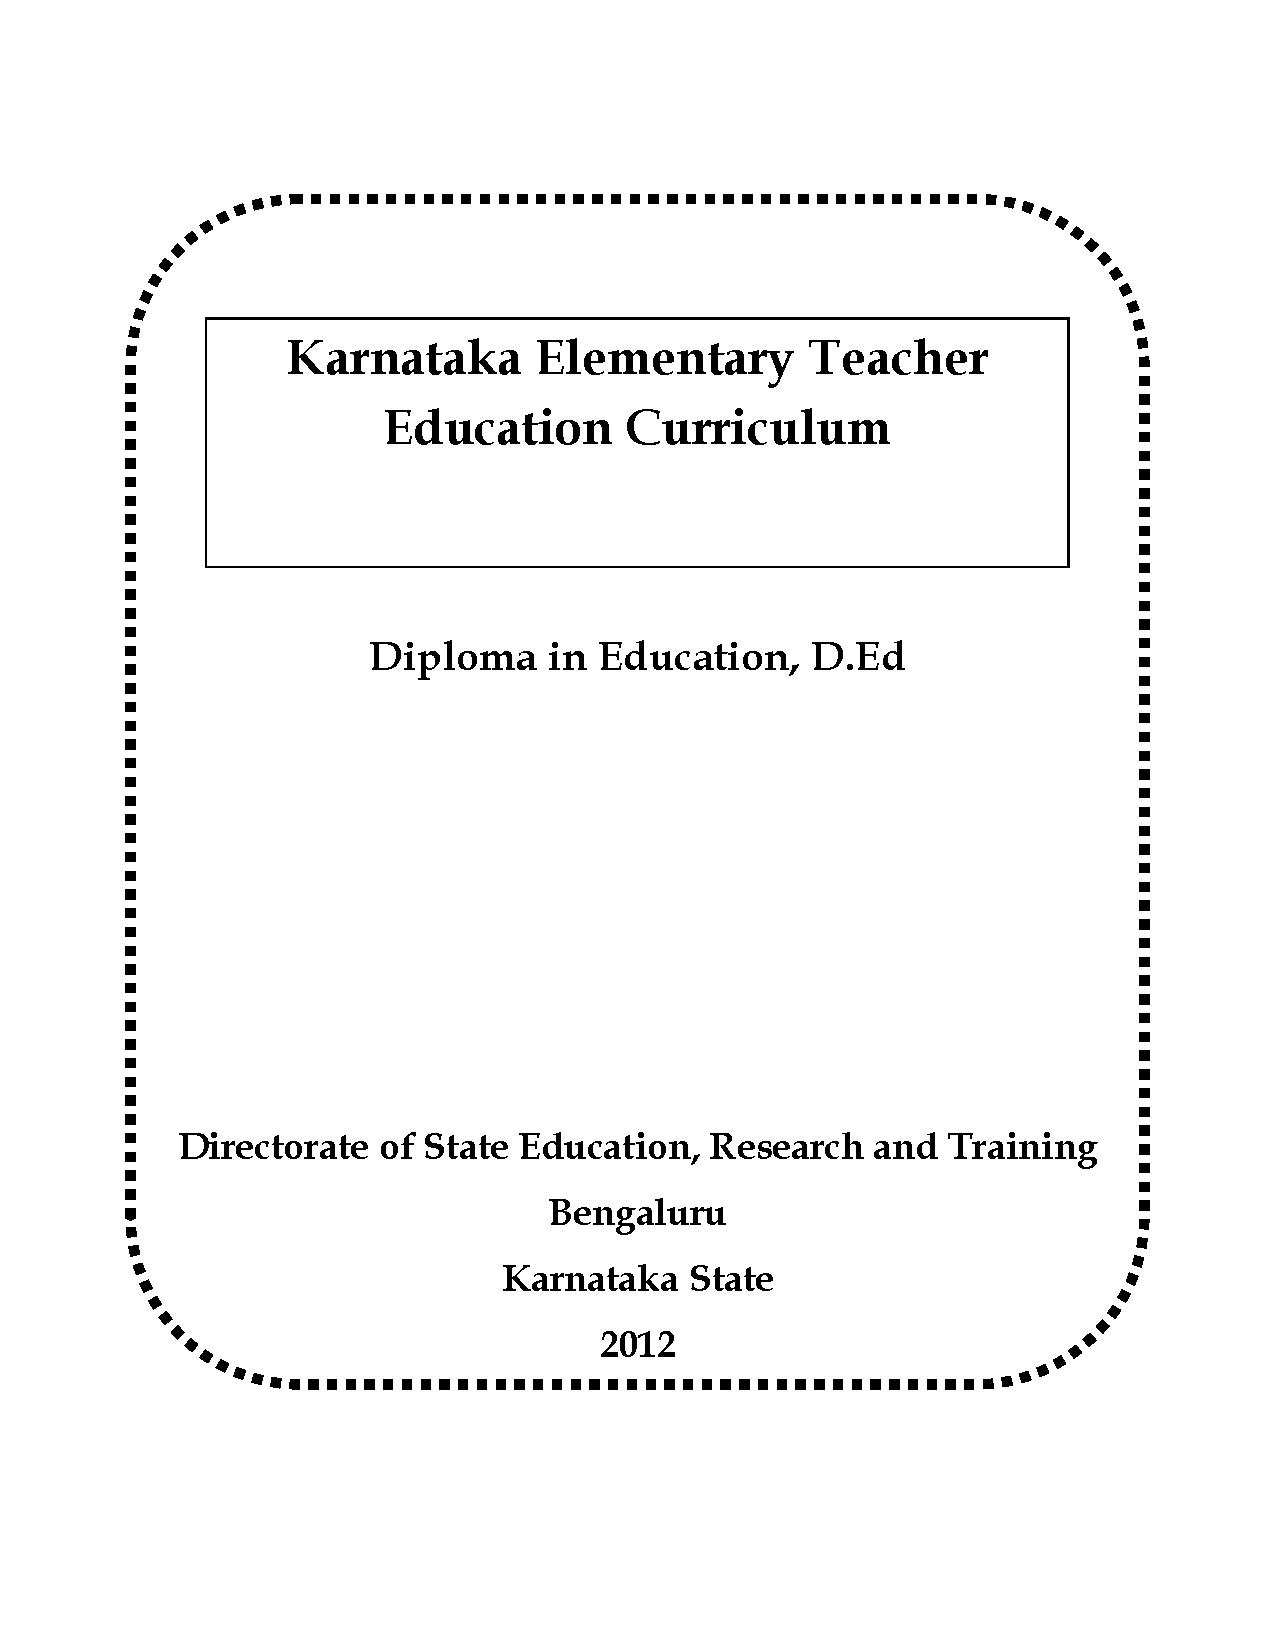 Karnataka Elementary Teacher Education Curriculum.pdf